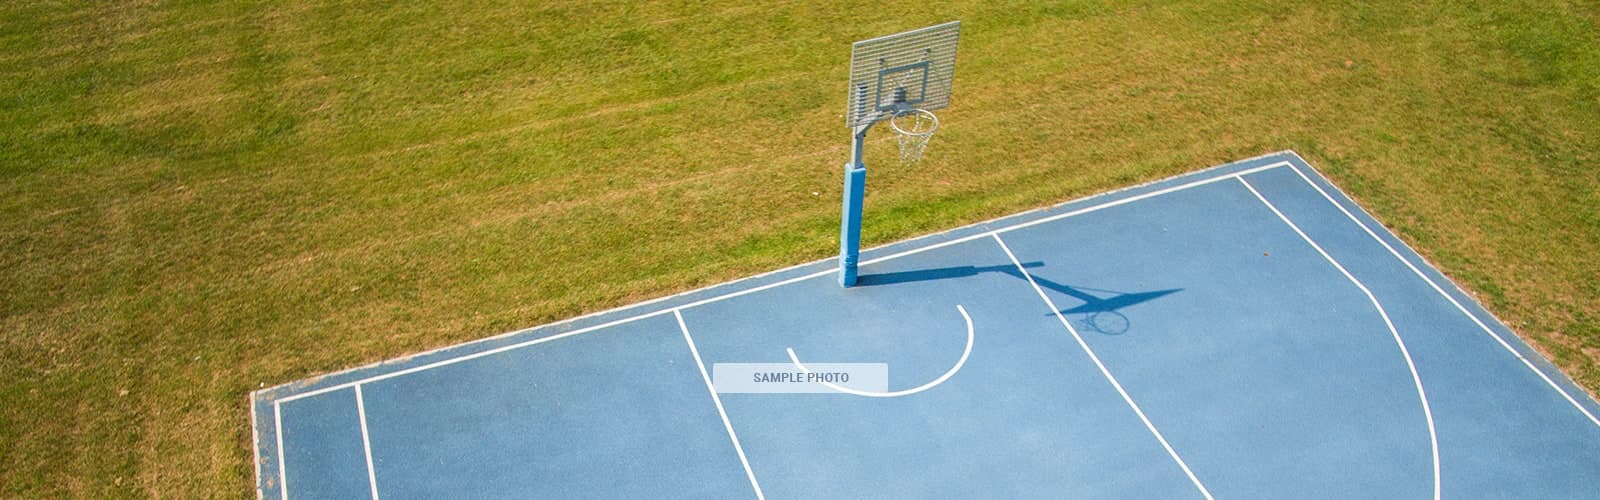 Ridgeview Elementary School Outdoor Basketball Courts in Orange Park Florida